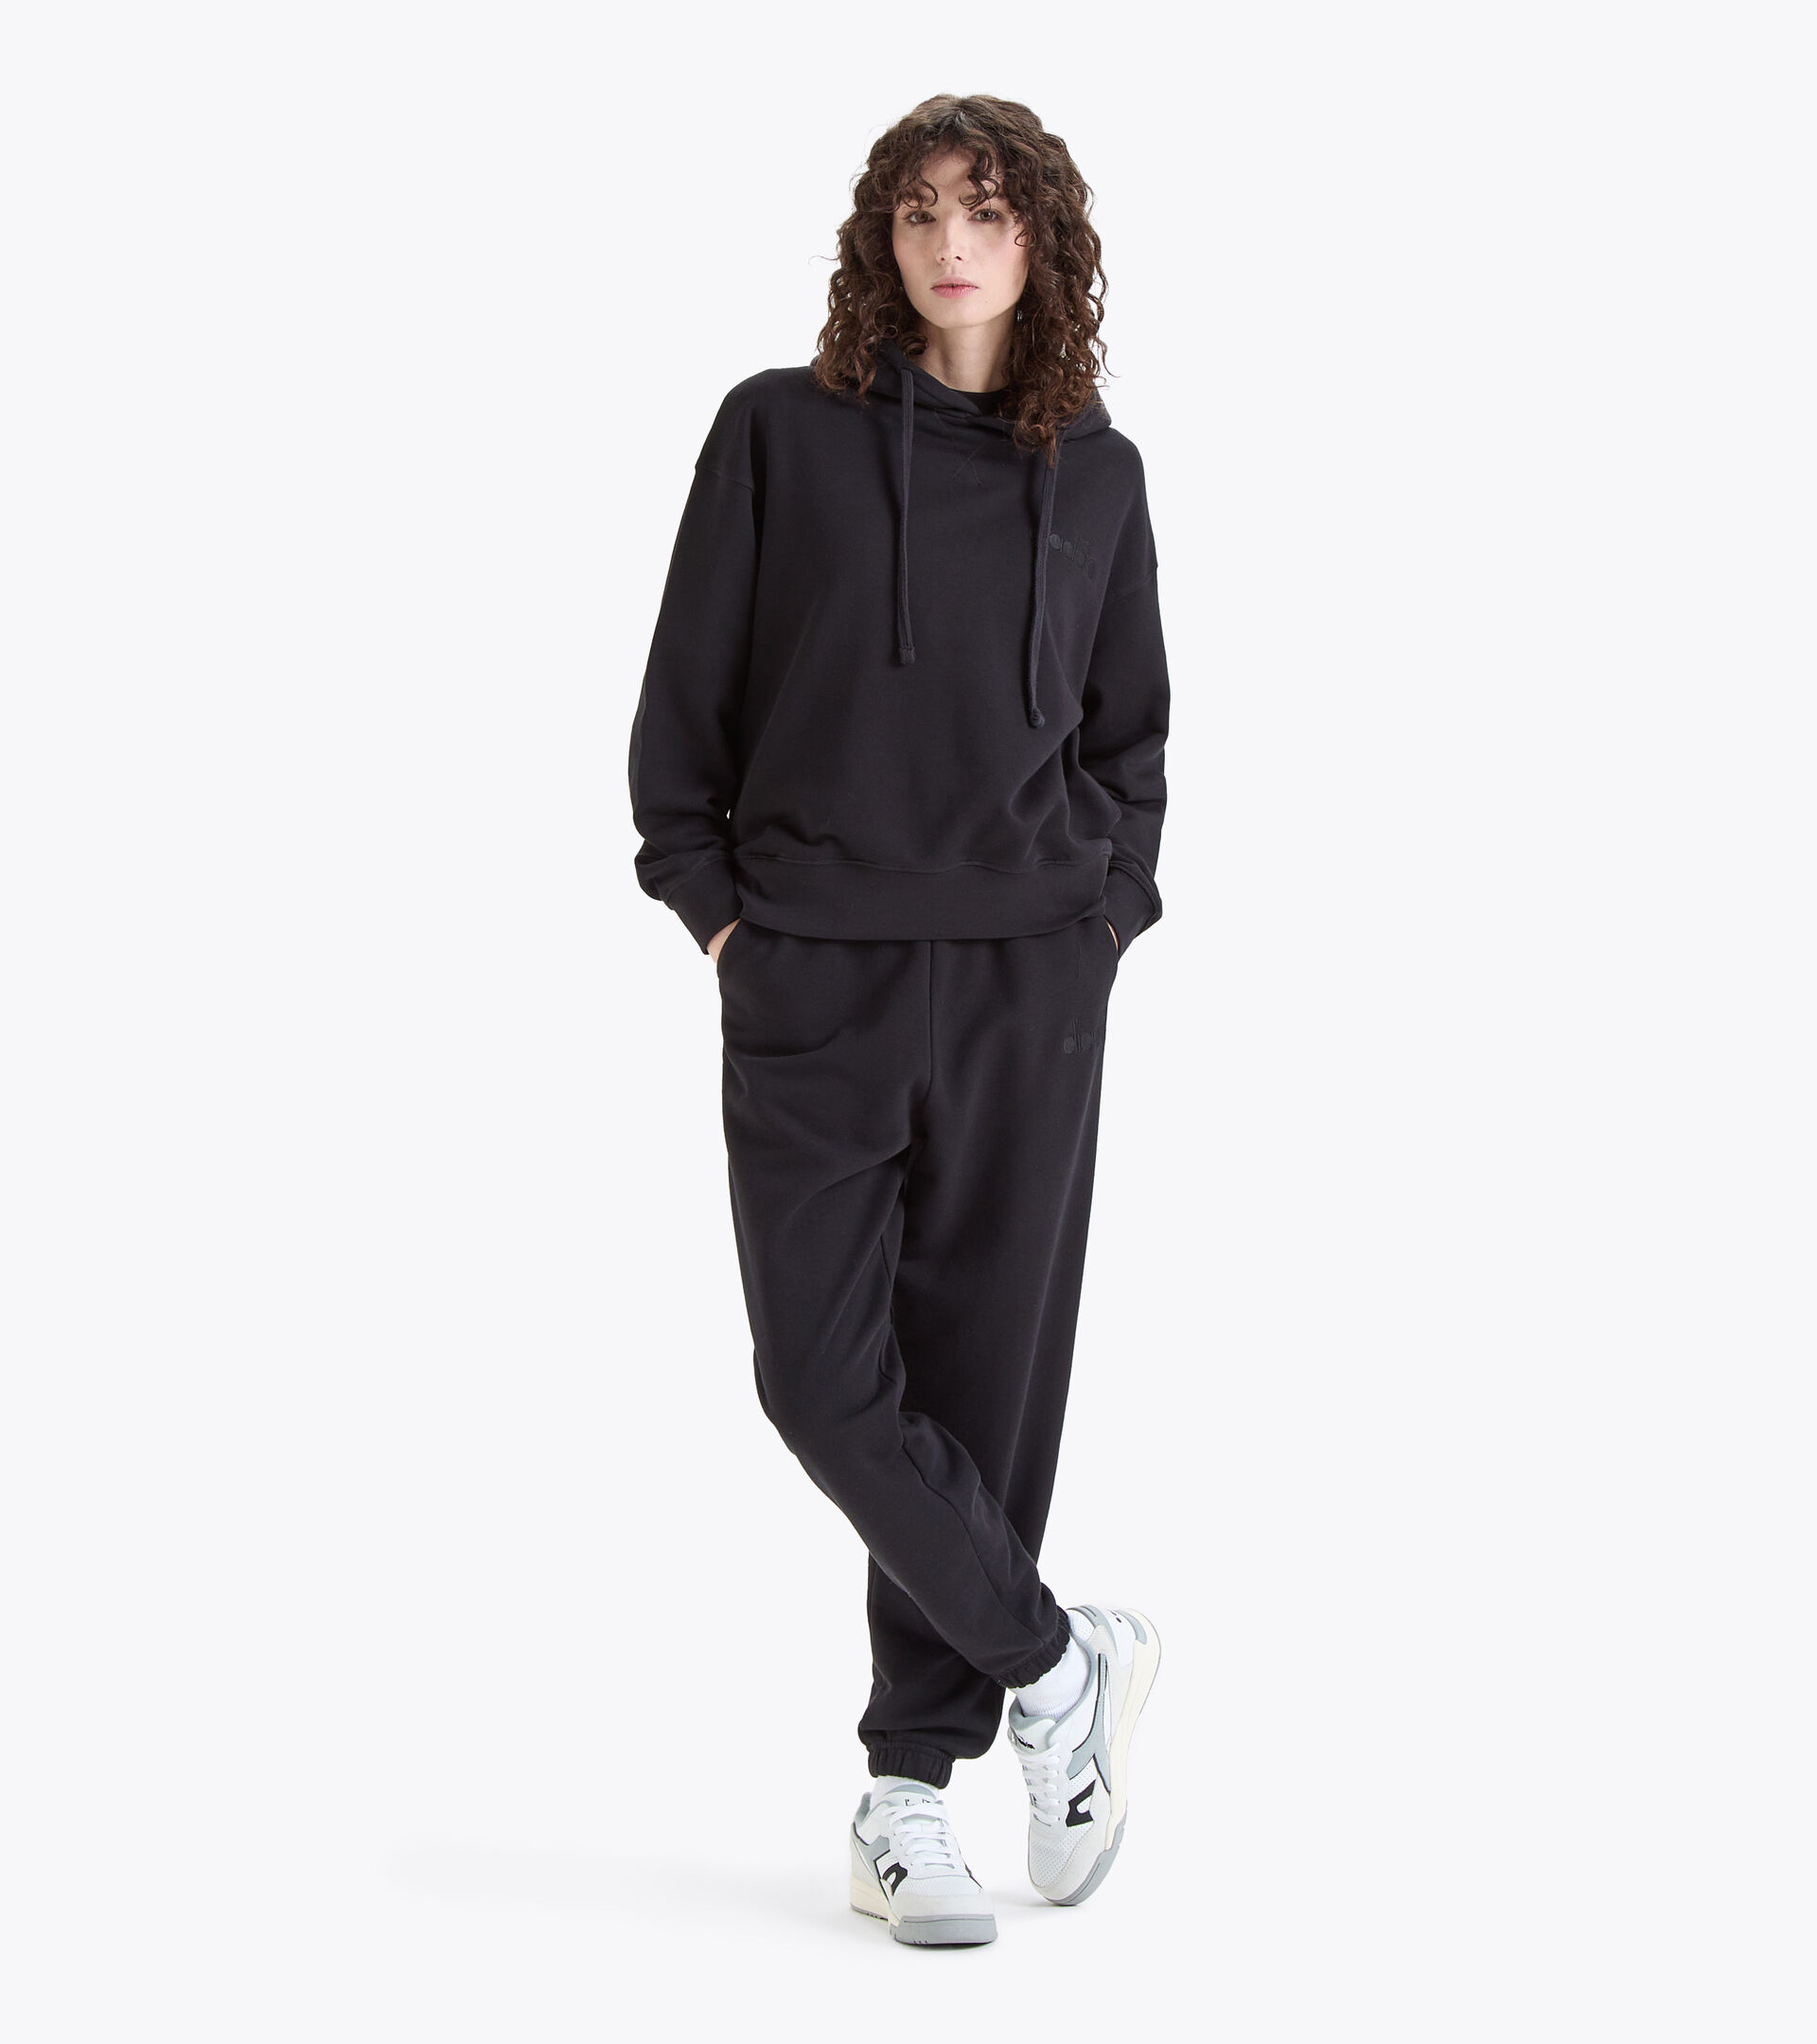 Cotton hoodie - Gender neutral HOODIE SPW LOGO BLACK - Diadora